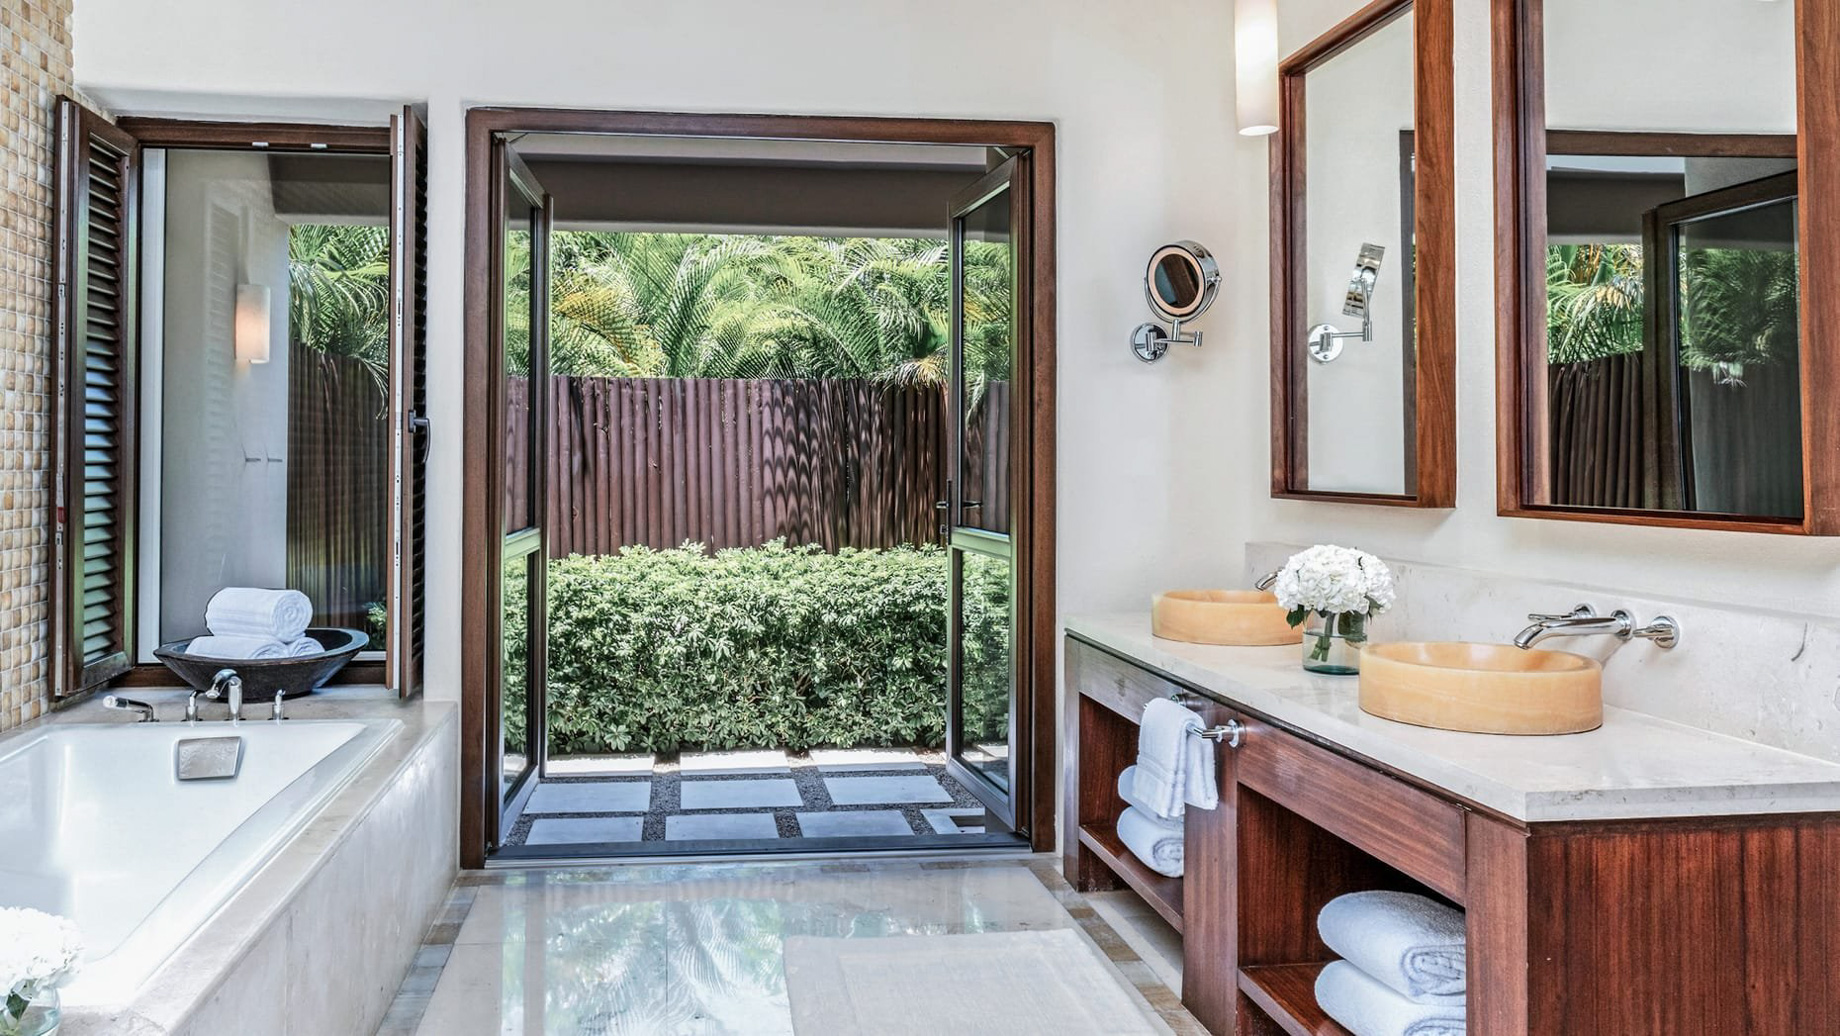 Four Seasons Resort Punta Mita – Nayarit, Mexico – Coral Beach House Bathroom Tub